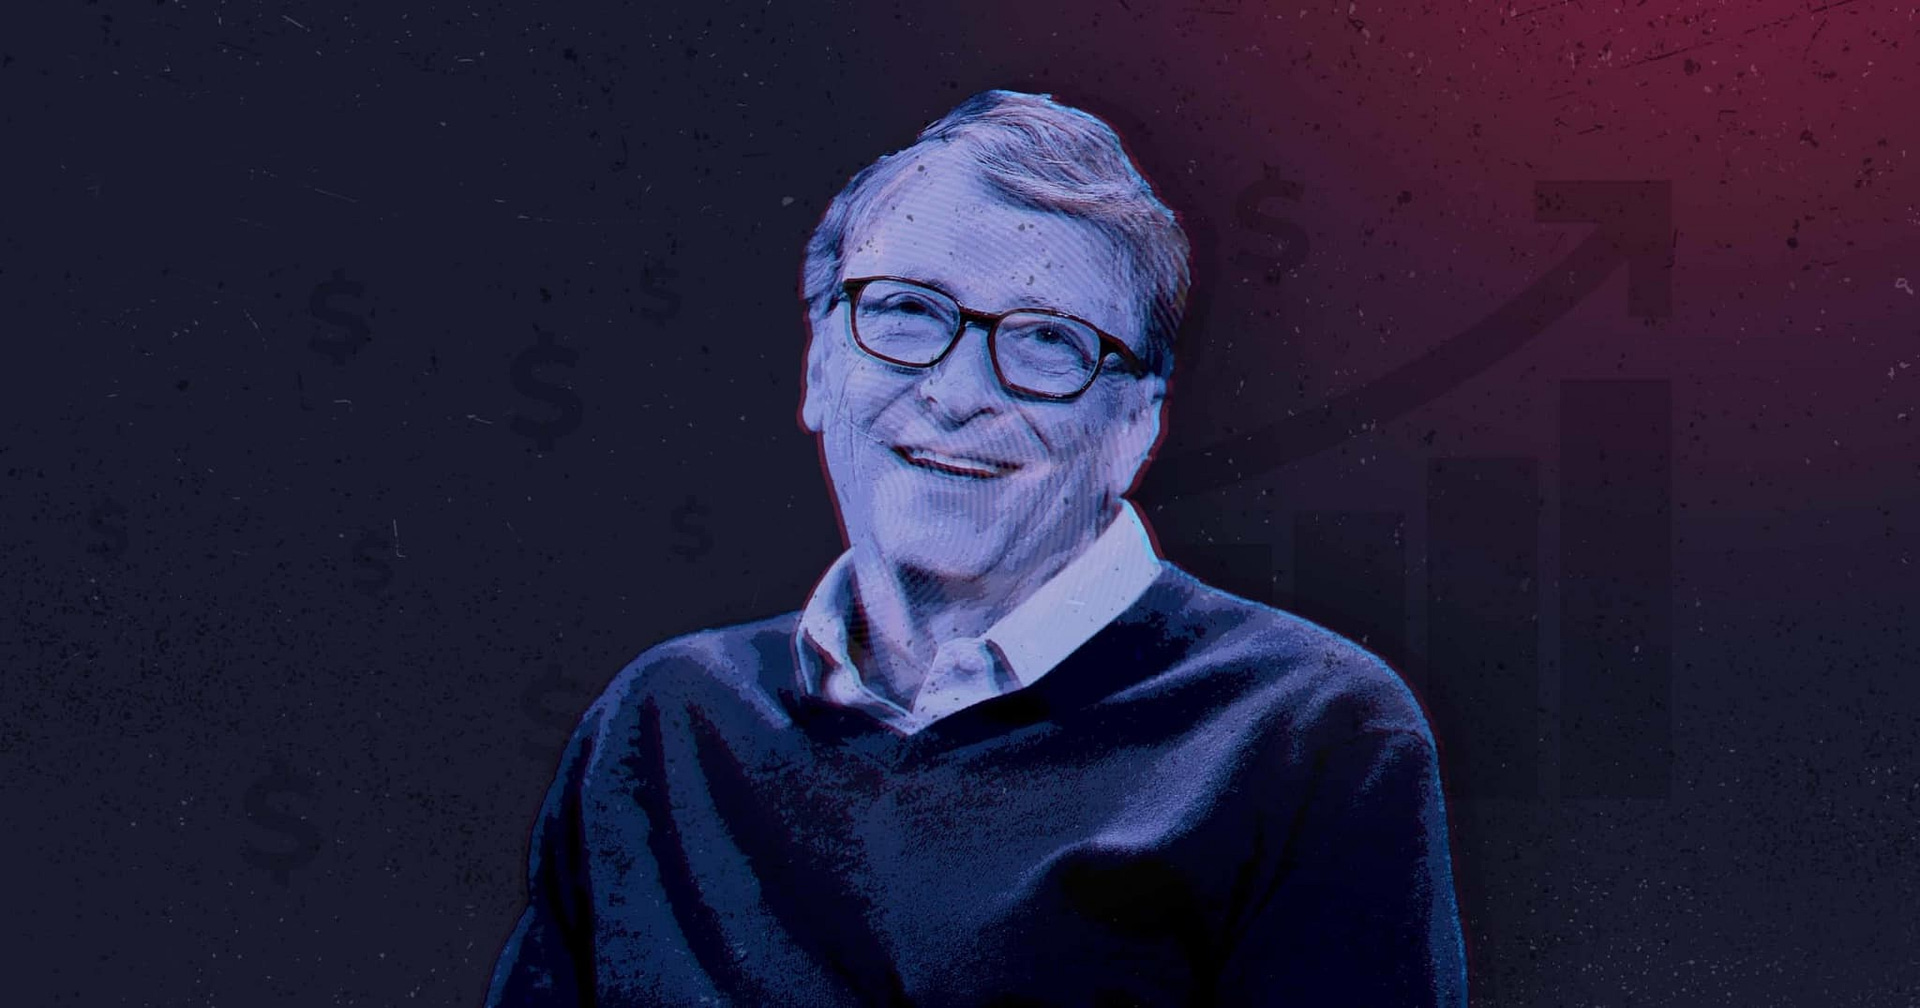 MSP sales advice from Bill Gates